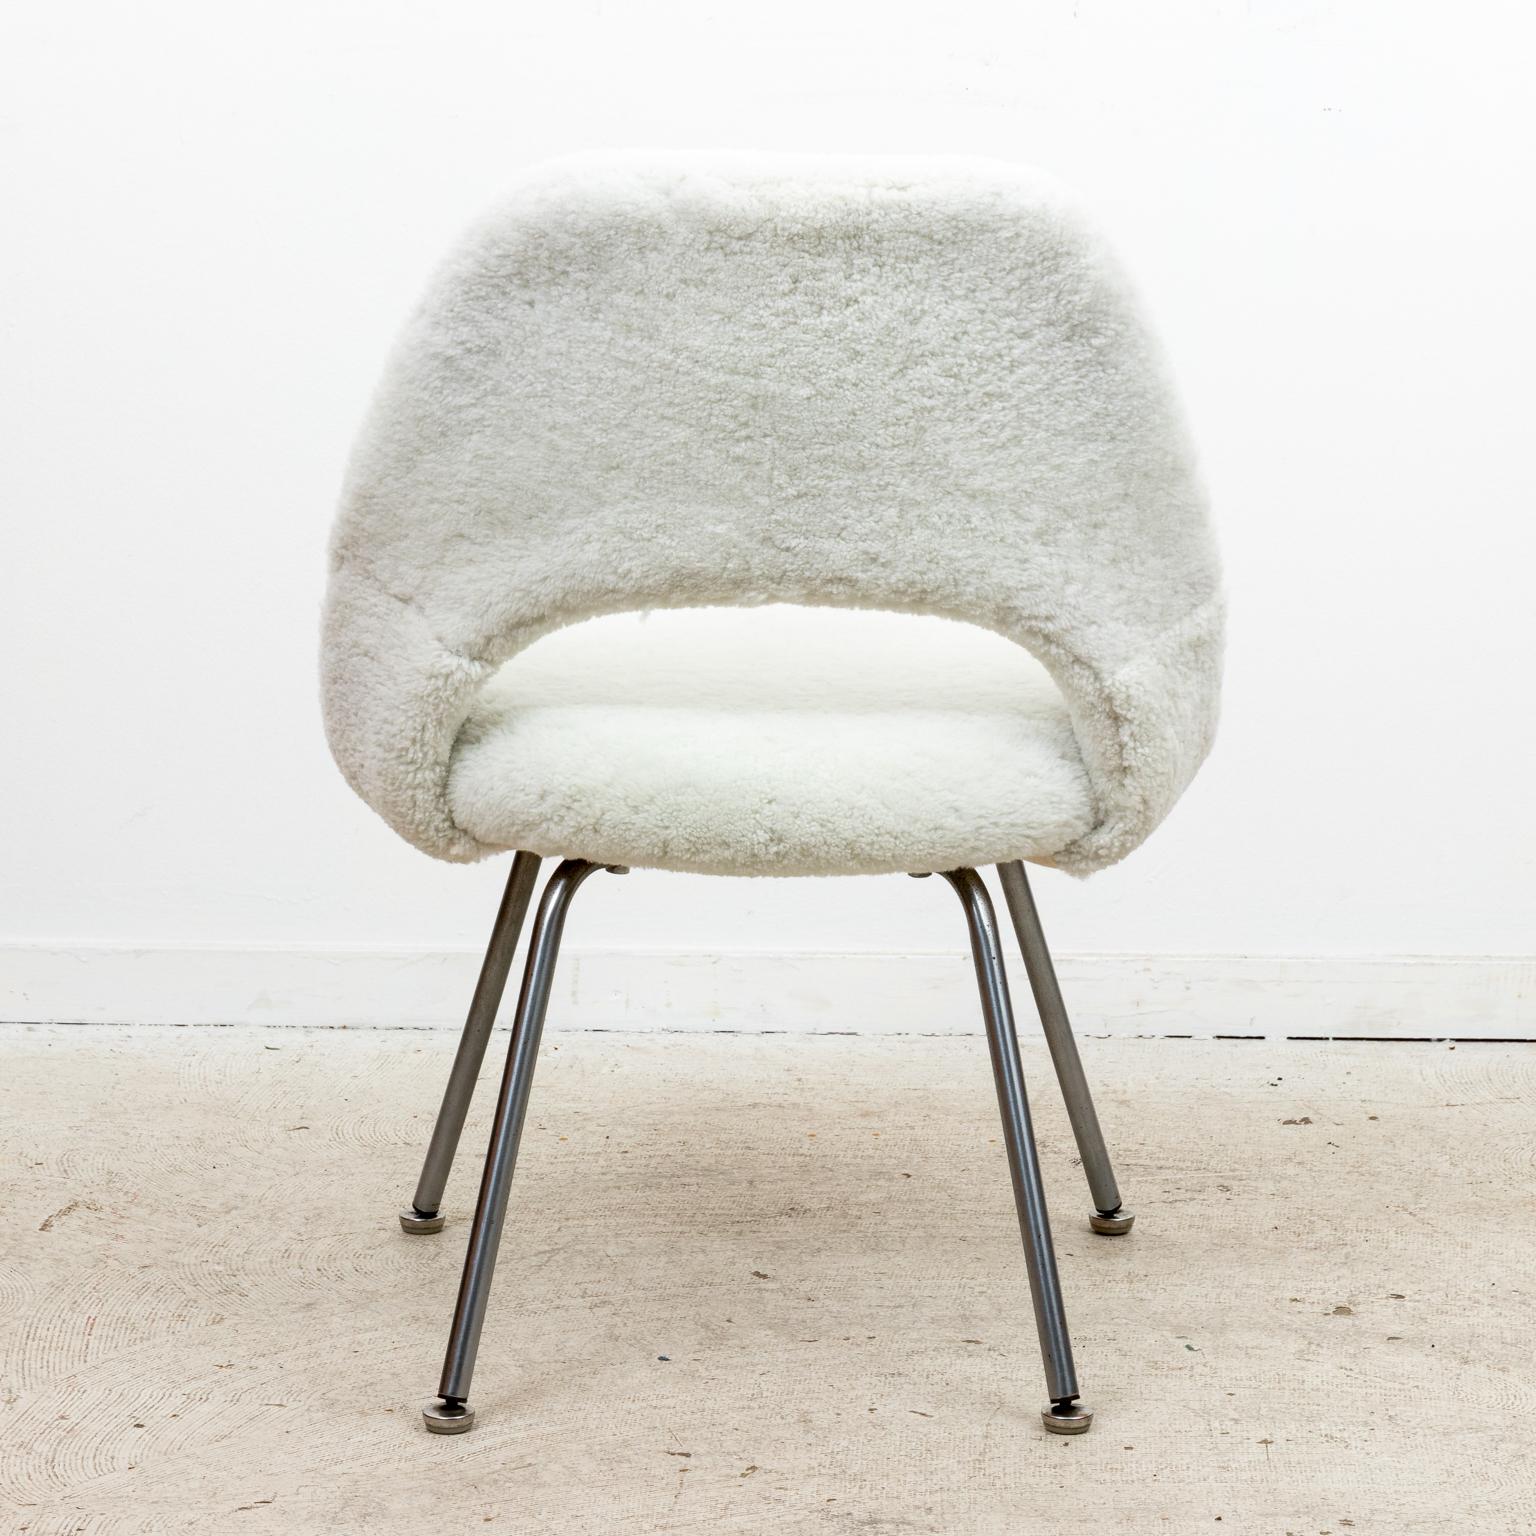 American Pair of Knoll Saarinen Shearling Chairs